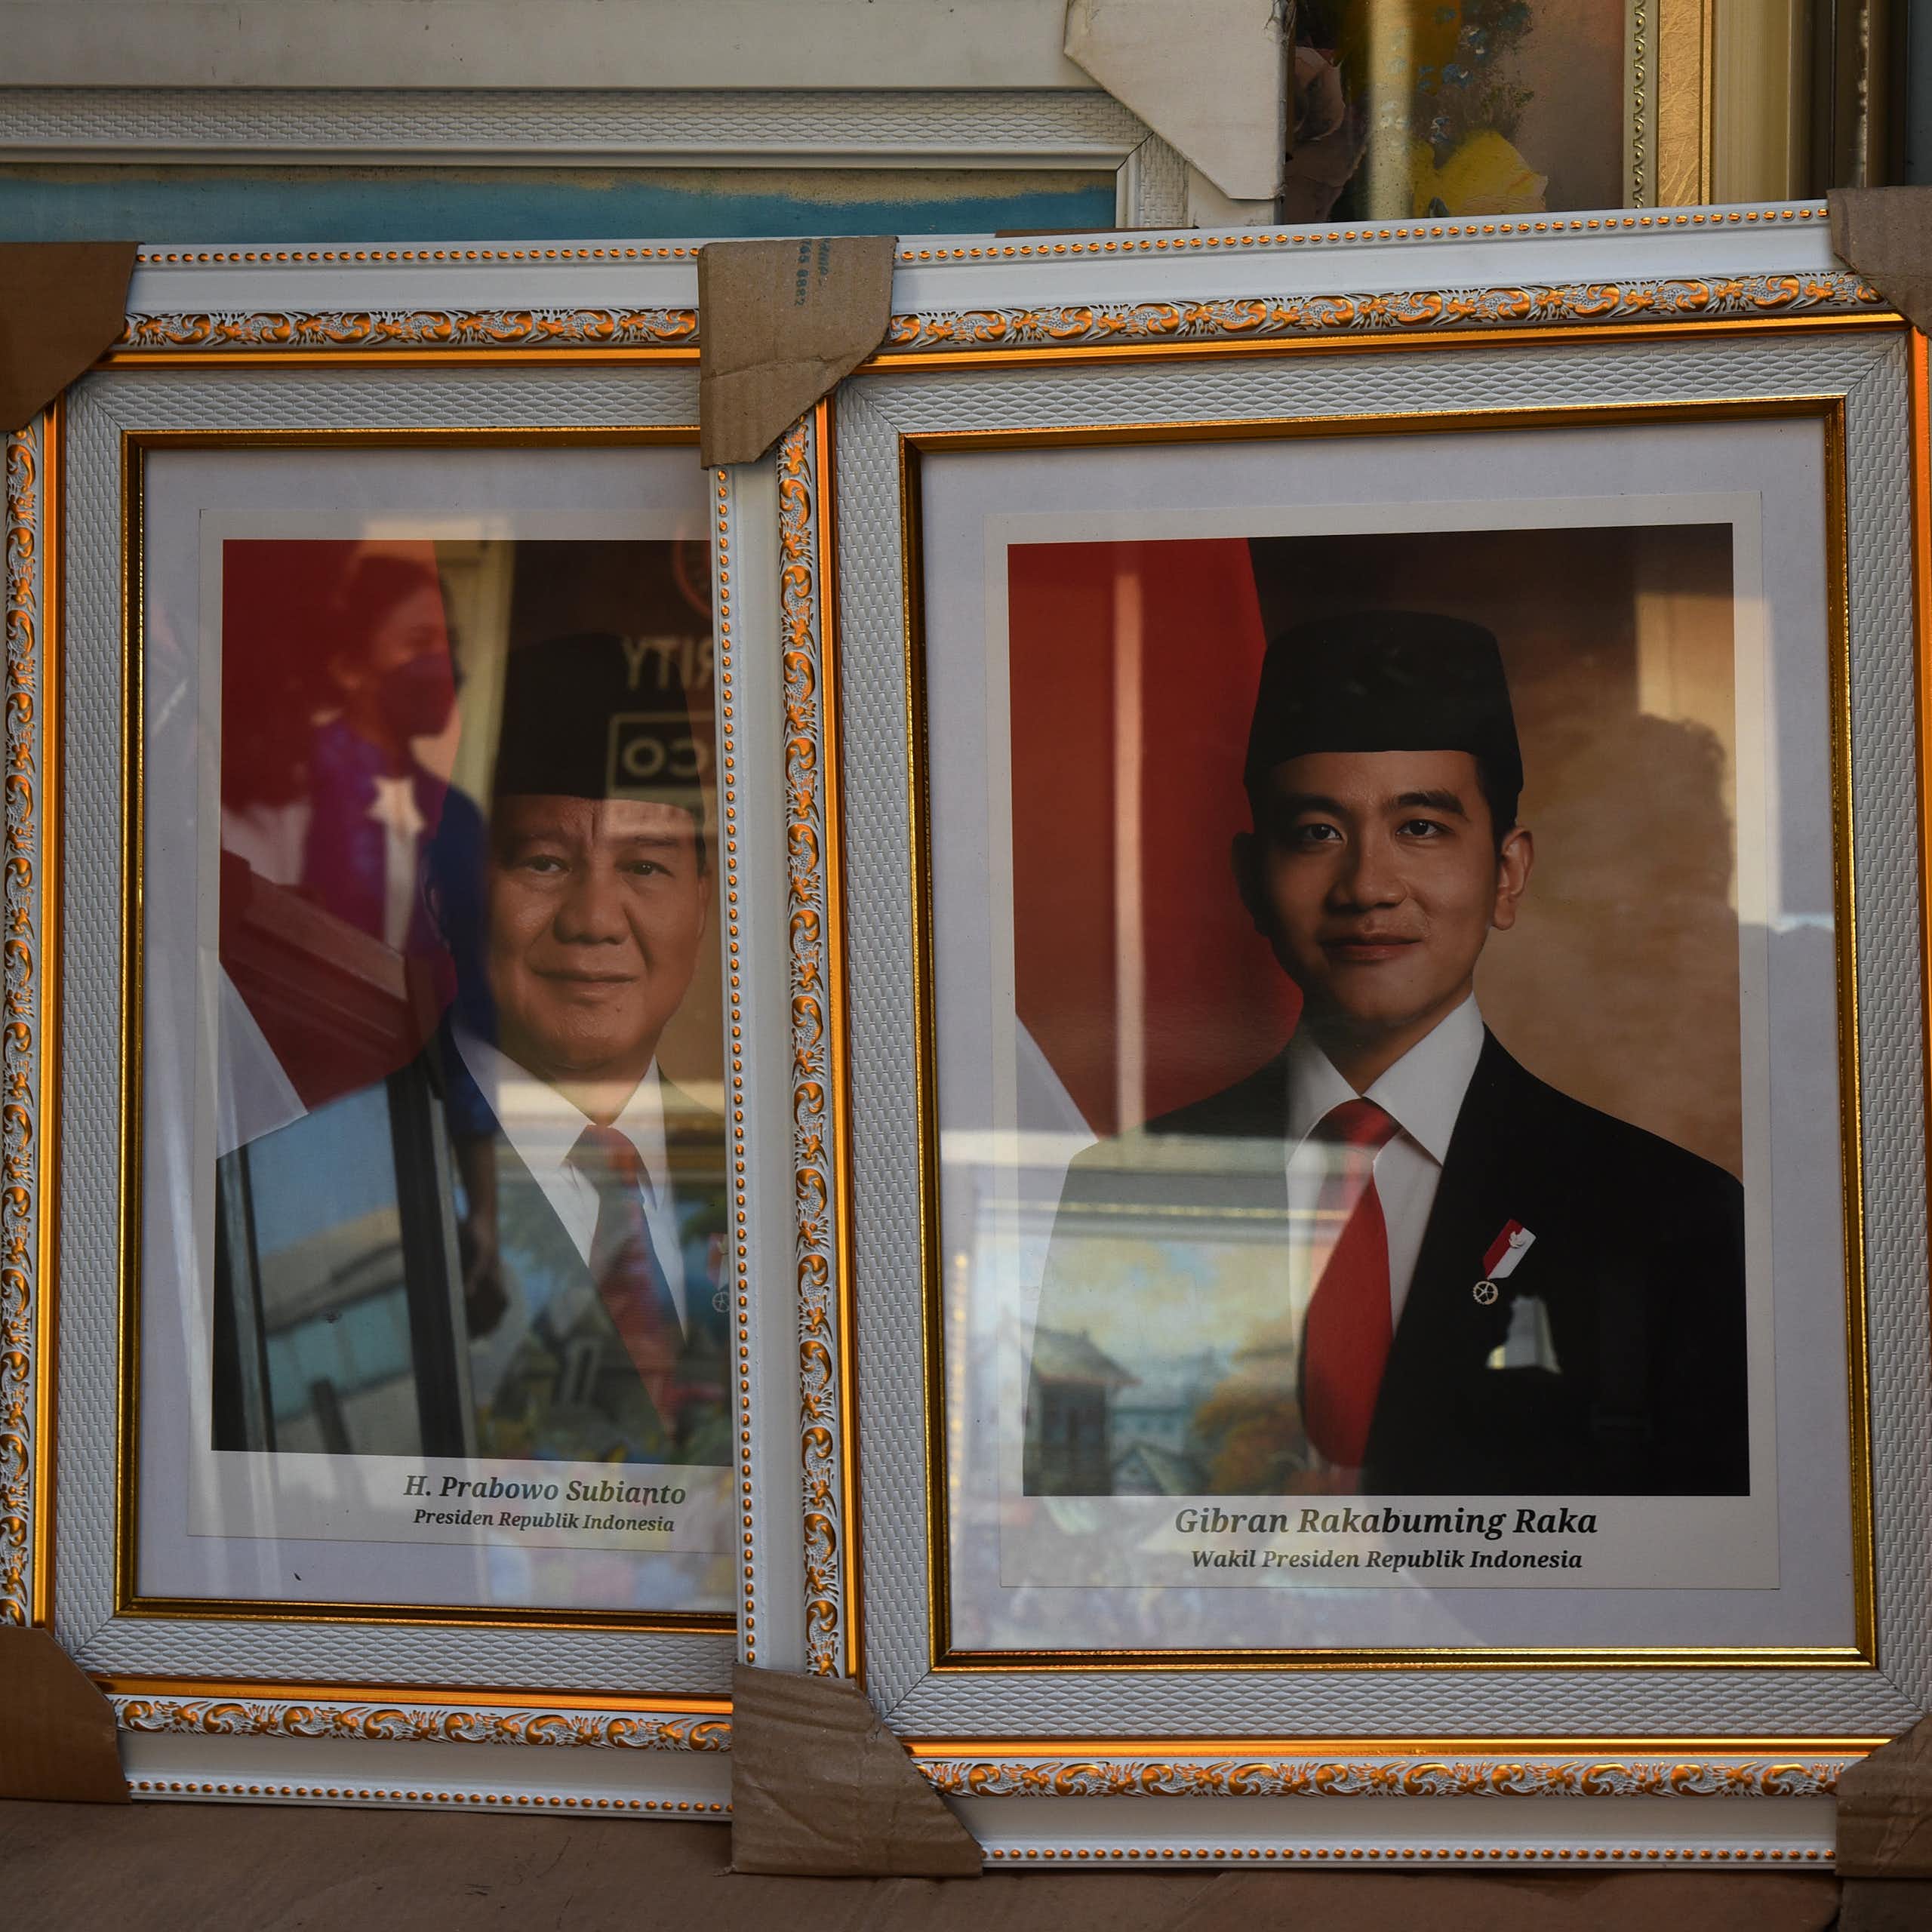 Manuver etika Jokowi, Prabowo dan Gibran: gambaran sikap ‘Machiavellian’ dalam politik praktis